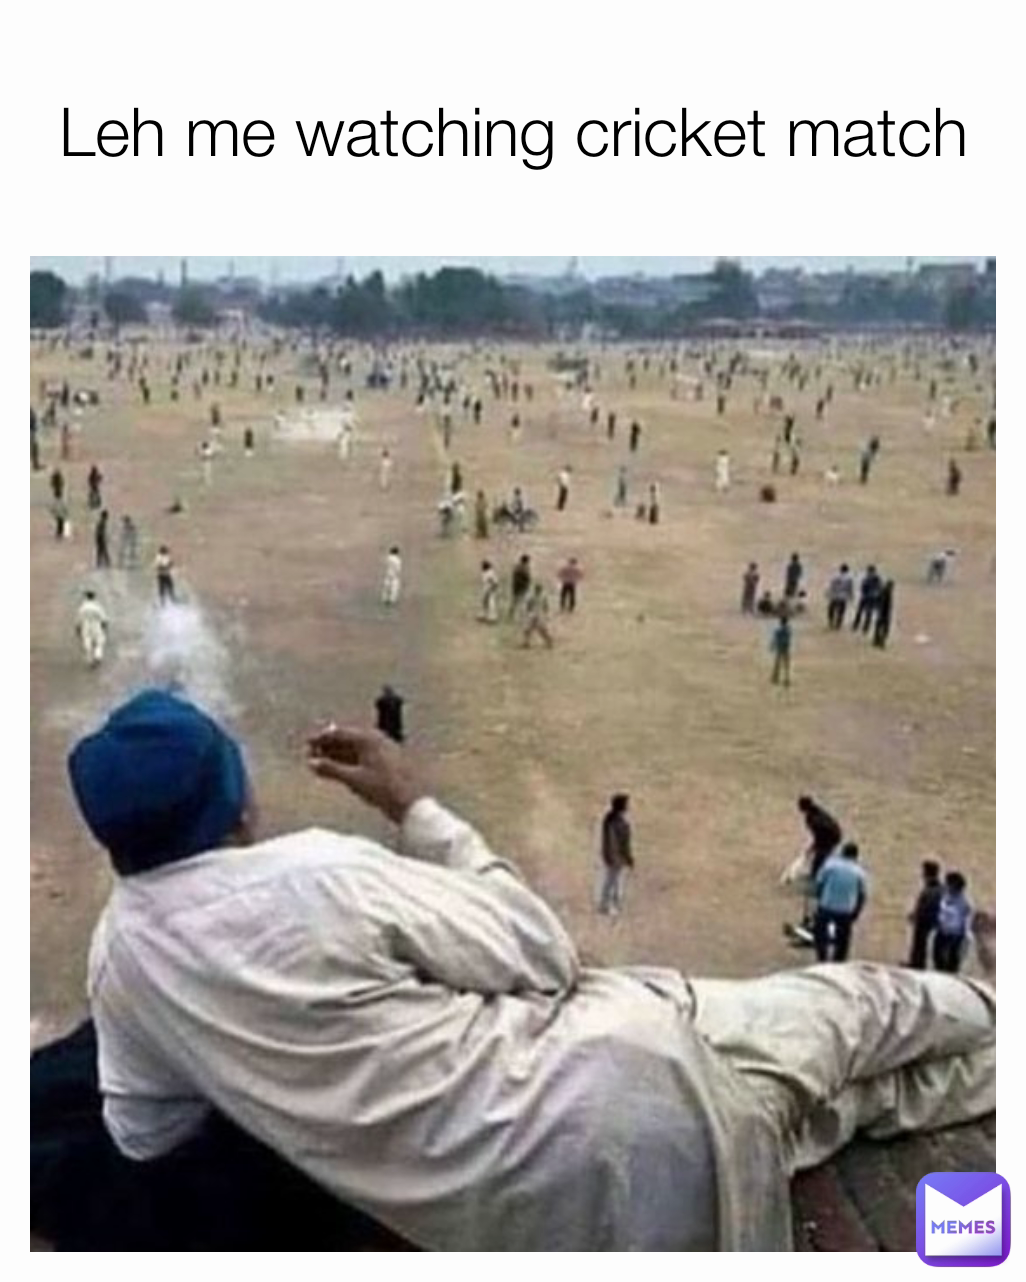 Leh me watching cricket match